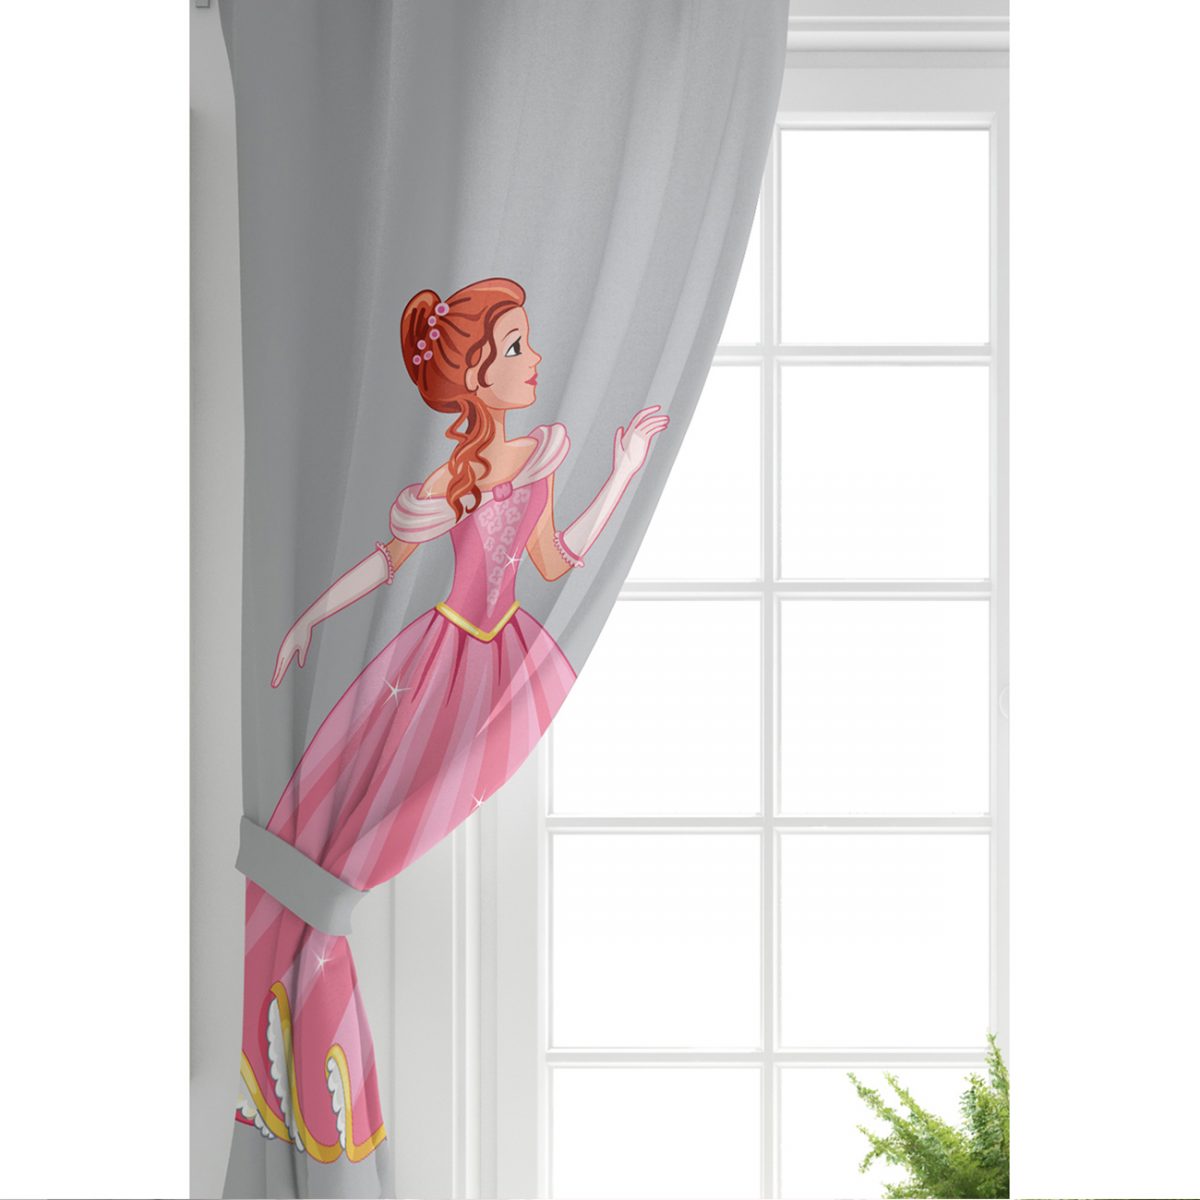 Pamuk Prenses Çizgifilm Desenli 3D Çocuk Odası Fon Perde Realhomes